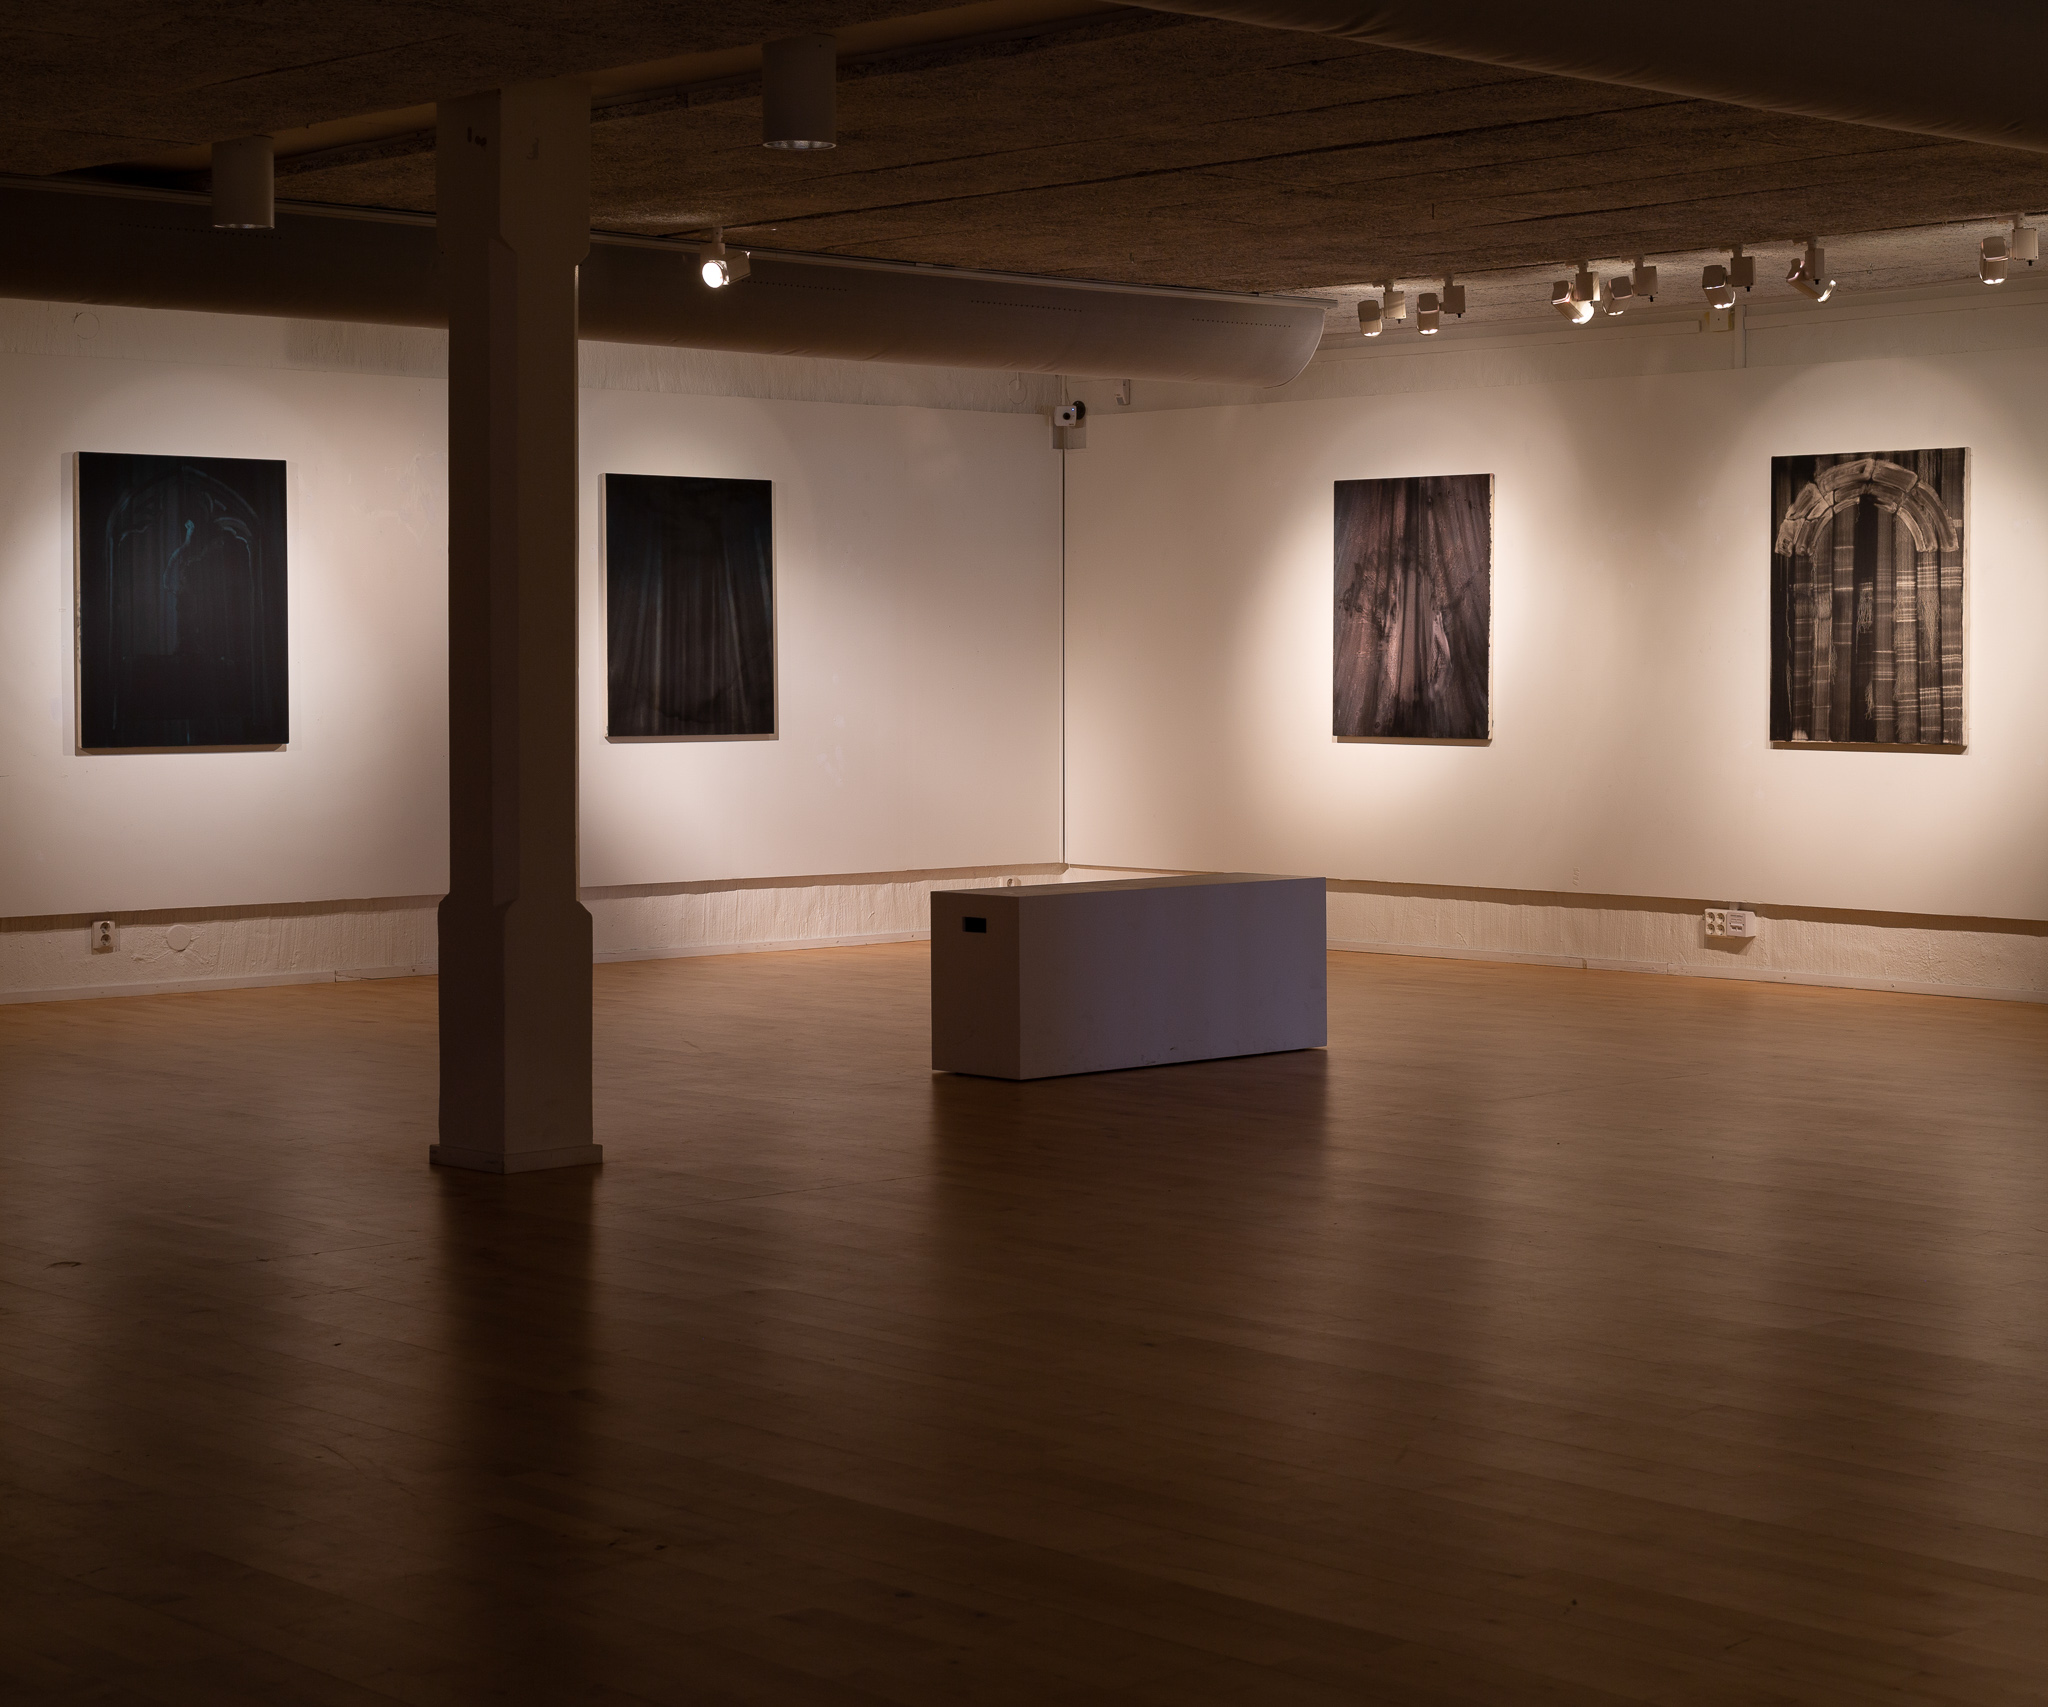 Figure in black, Översinligheten, Surtr,Valv 100 x 80 cm x 4 oil on canvas